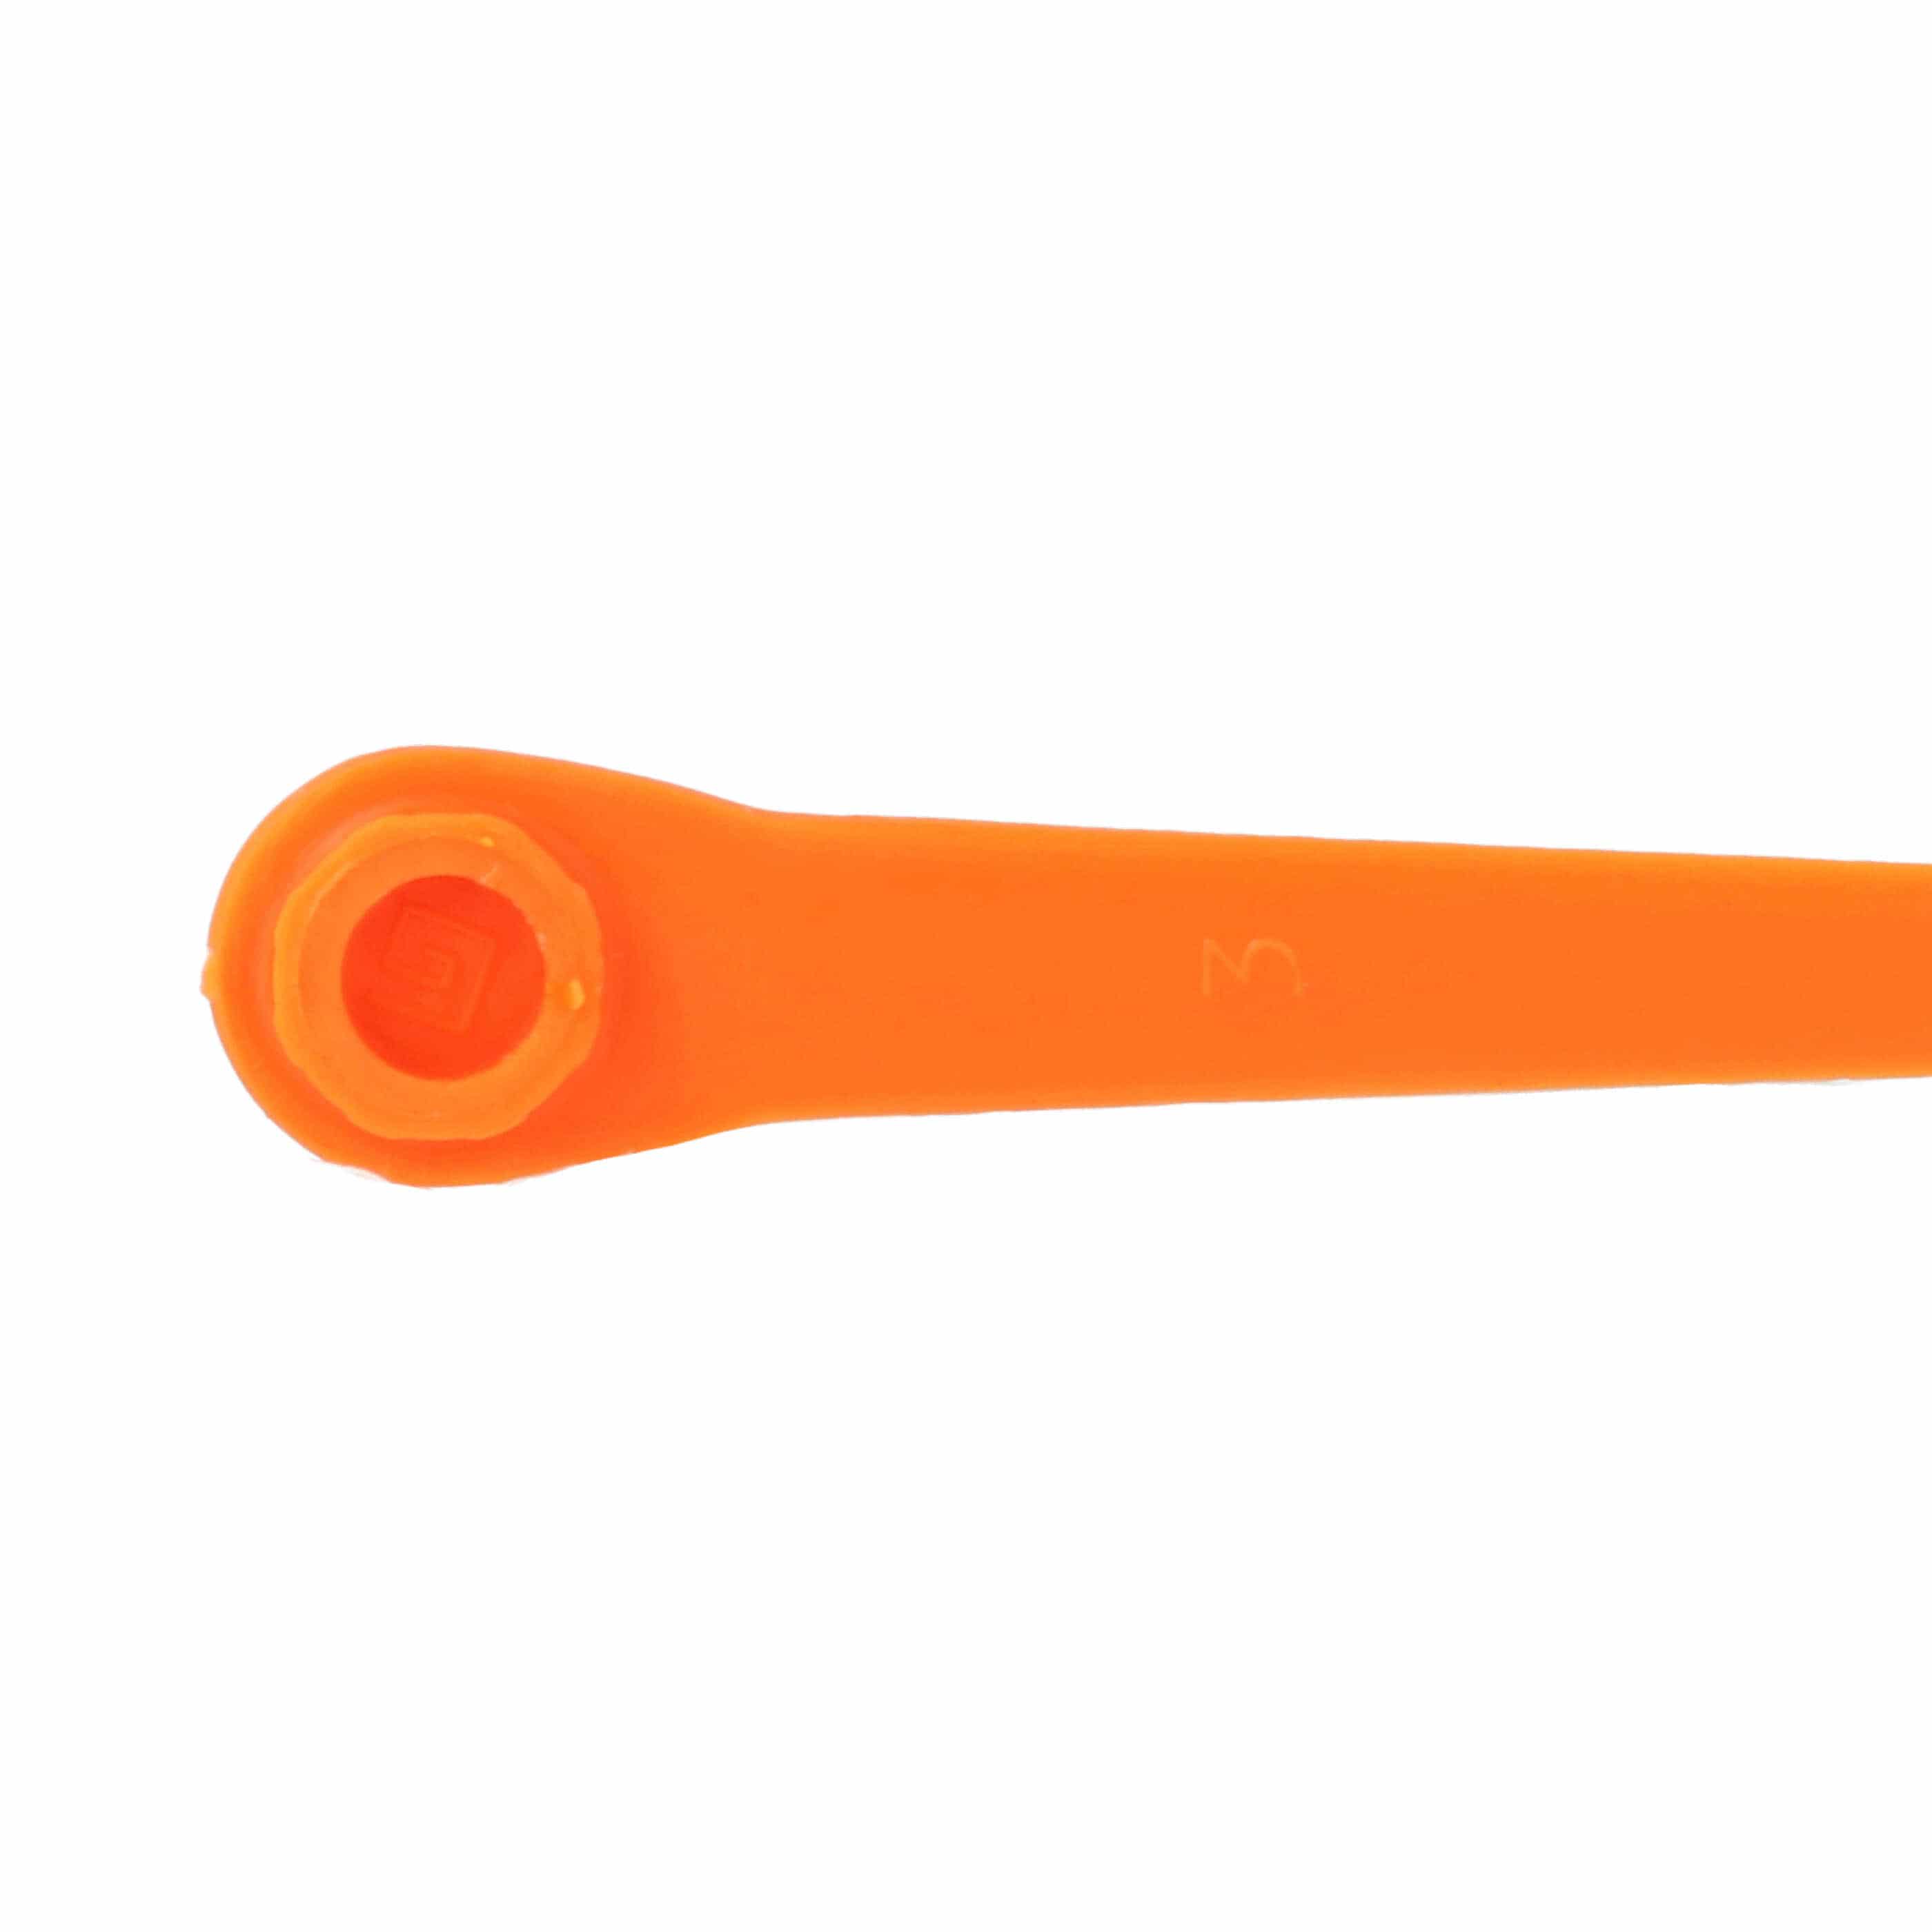 20x Cuchillas reemplaza Gardena RotorCut 5368-20 para cortacéspedes - naranja